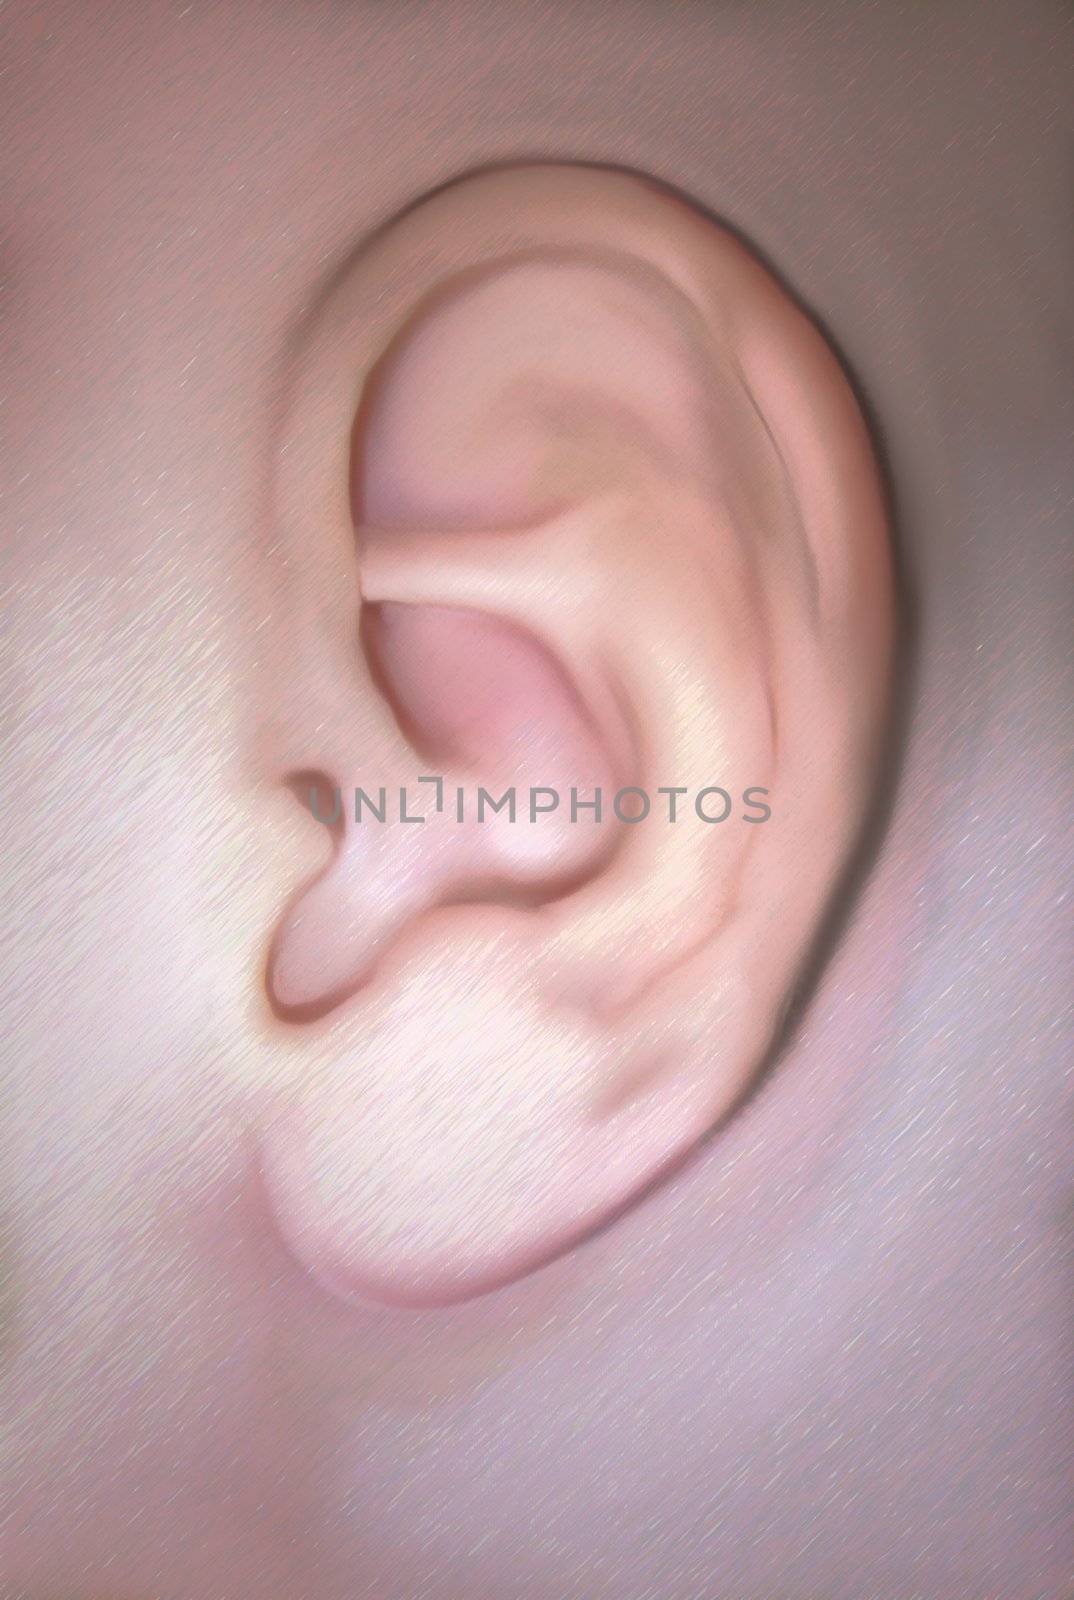 Illustration of the human ear